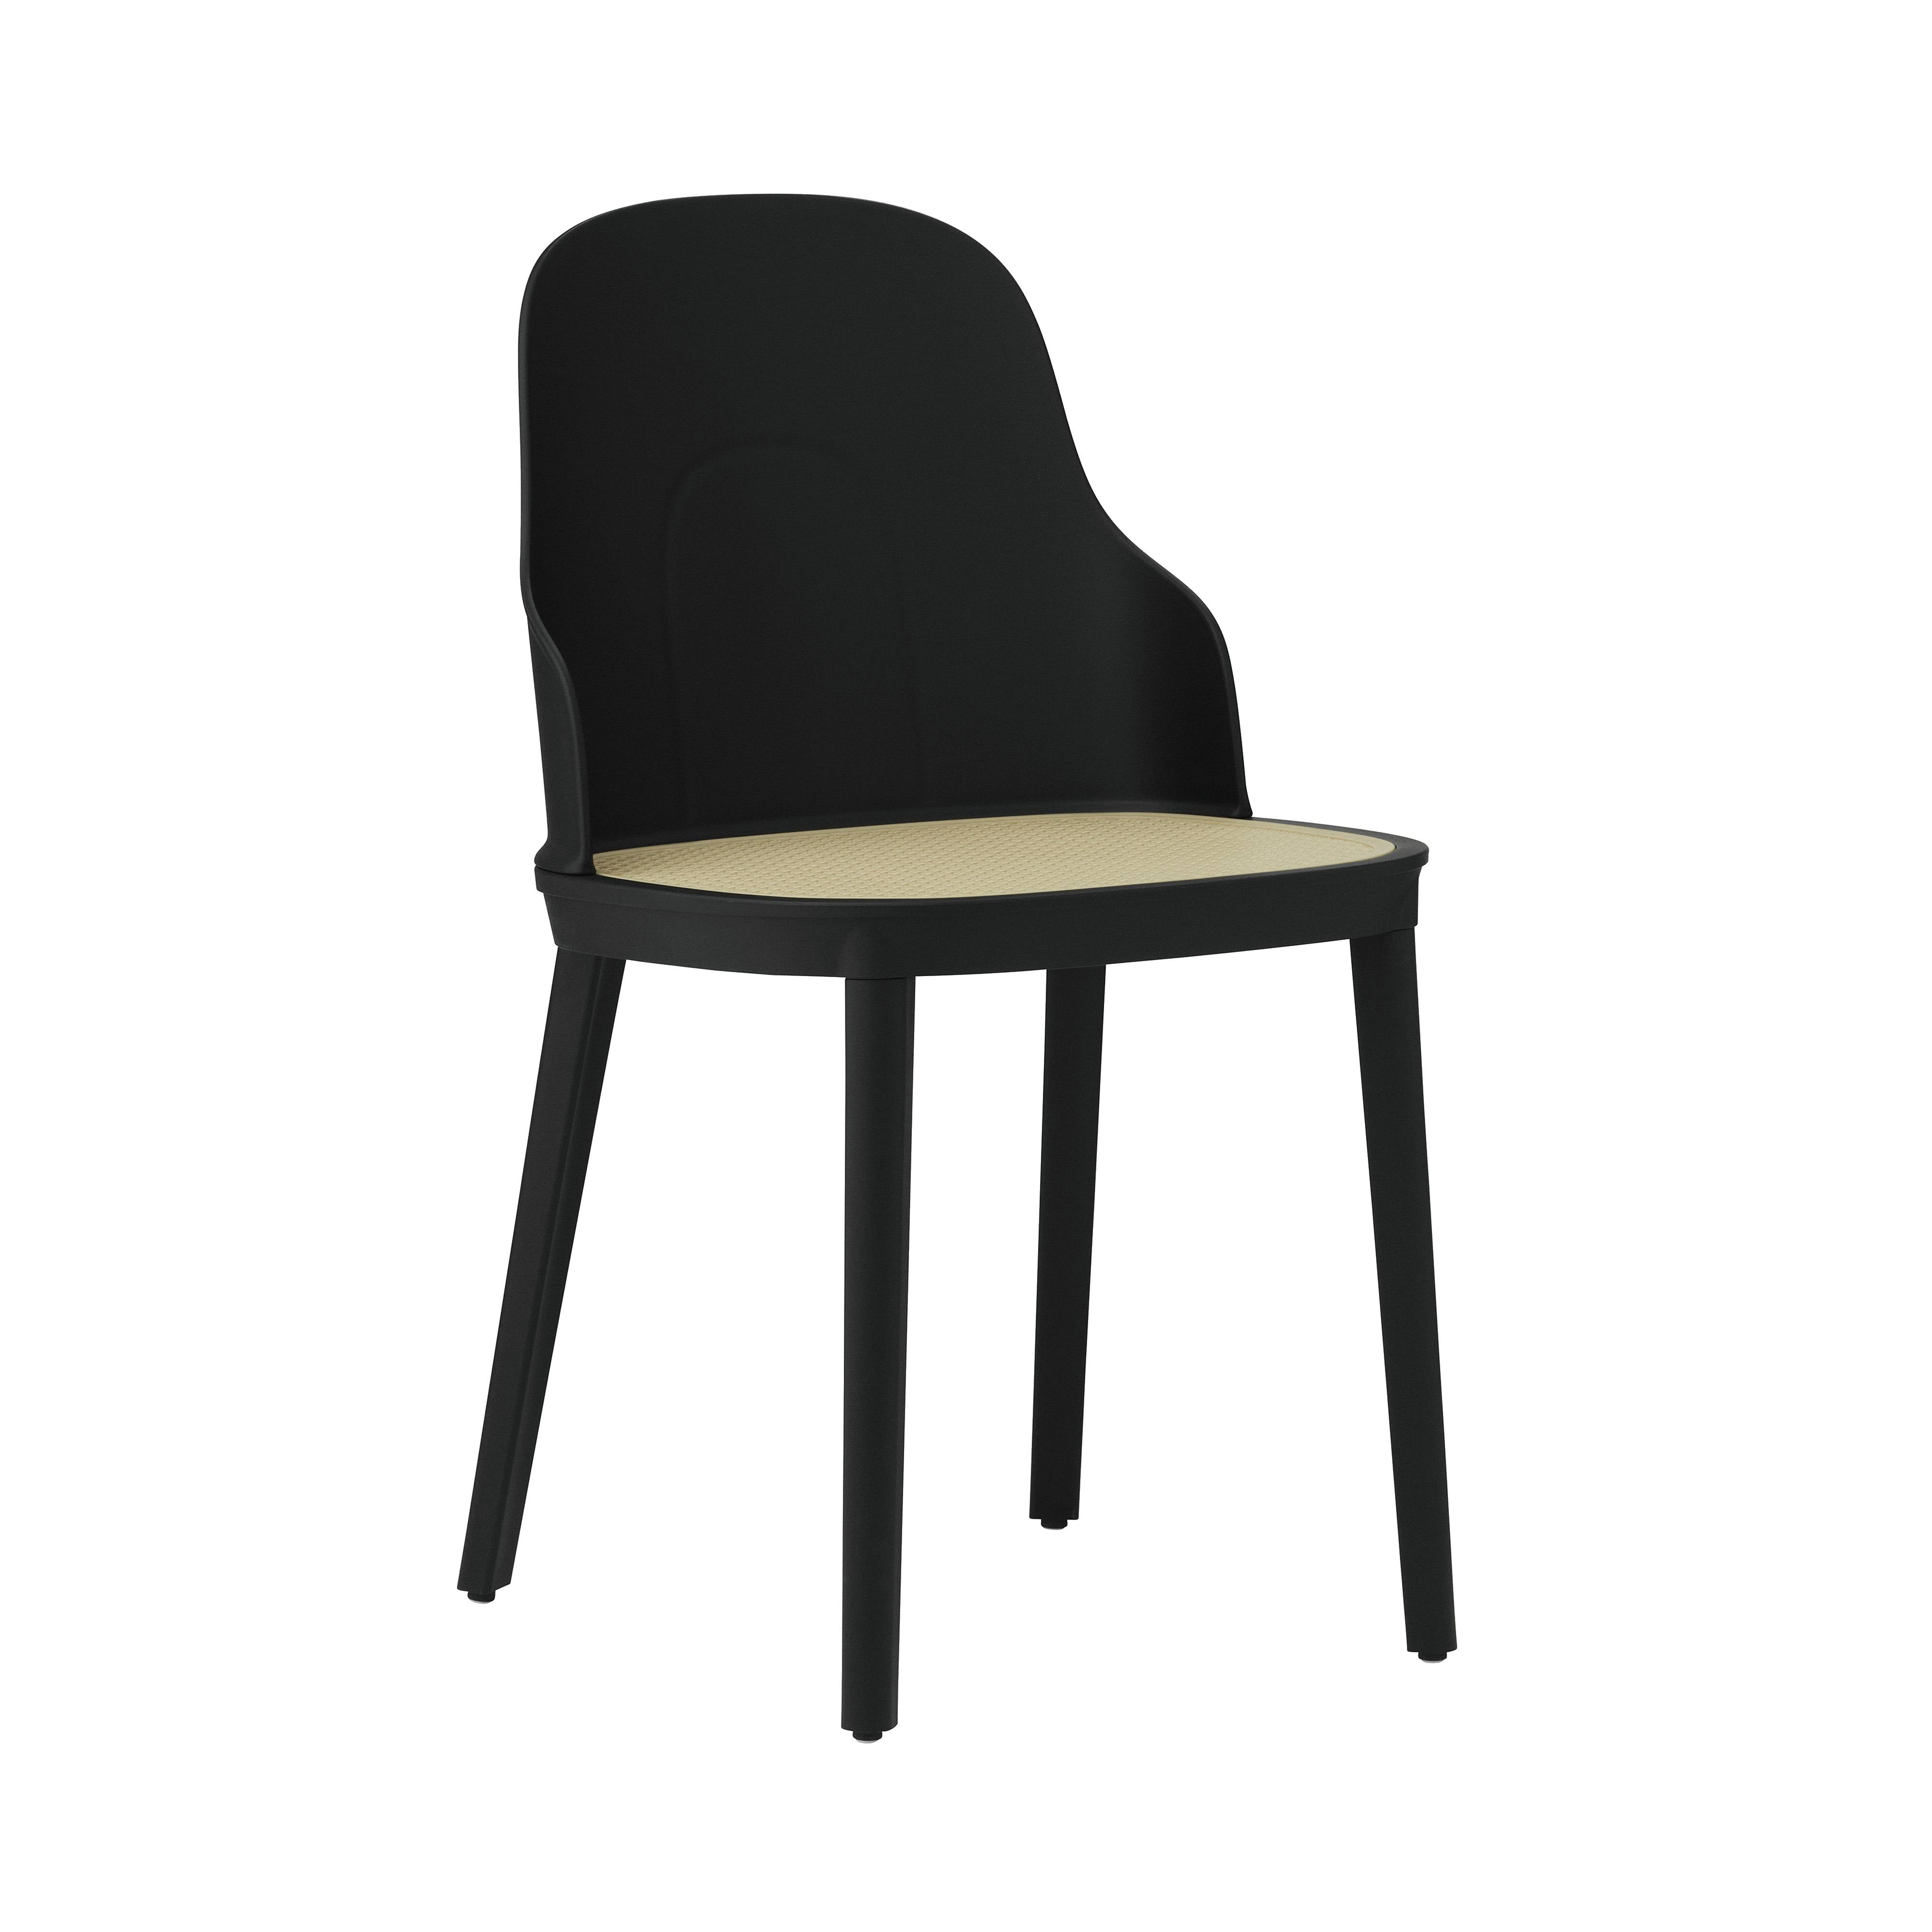 Allez Chair: Molded Wicker + Black + Polypropylene